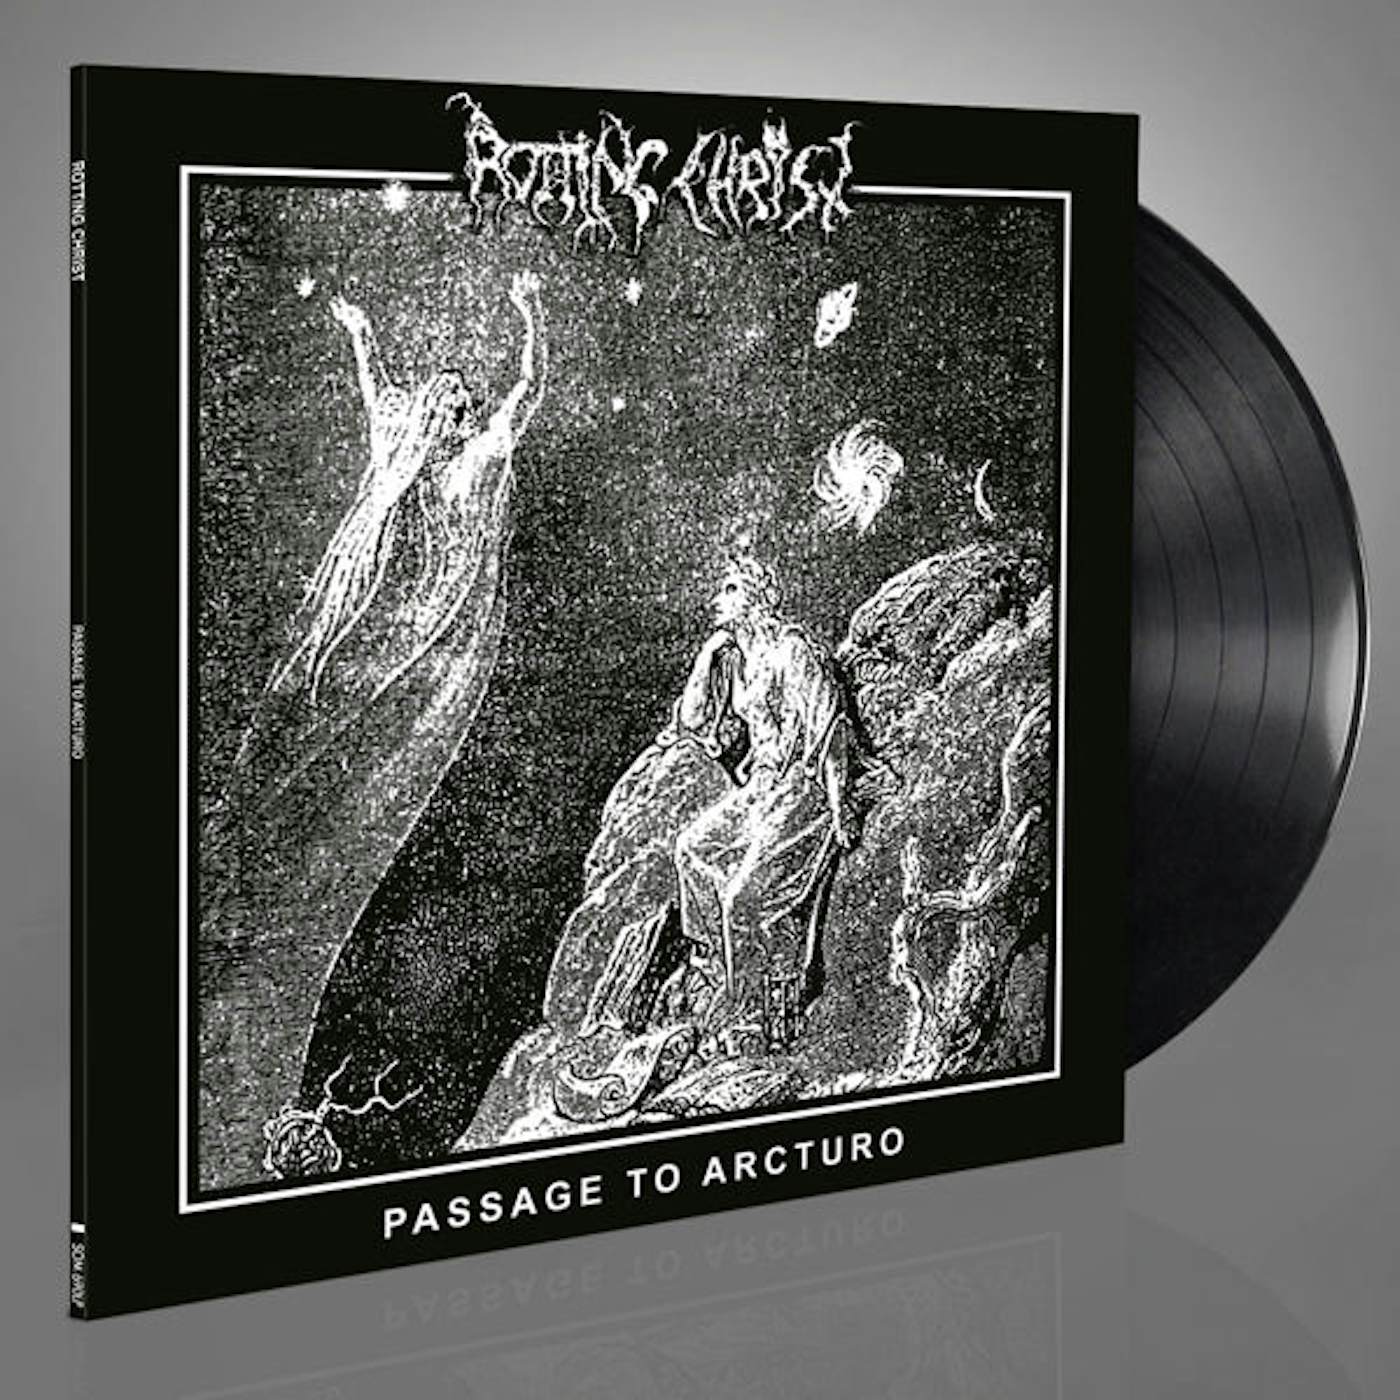 Rotting Christ LP - Passage To Arcturo (Vinyl)